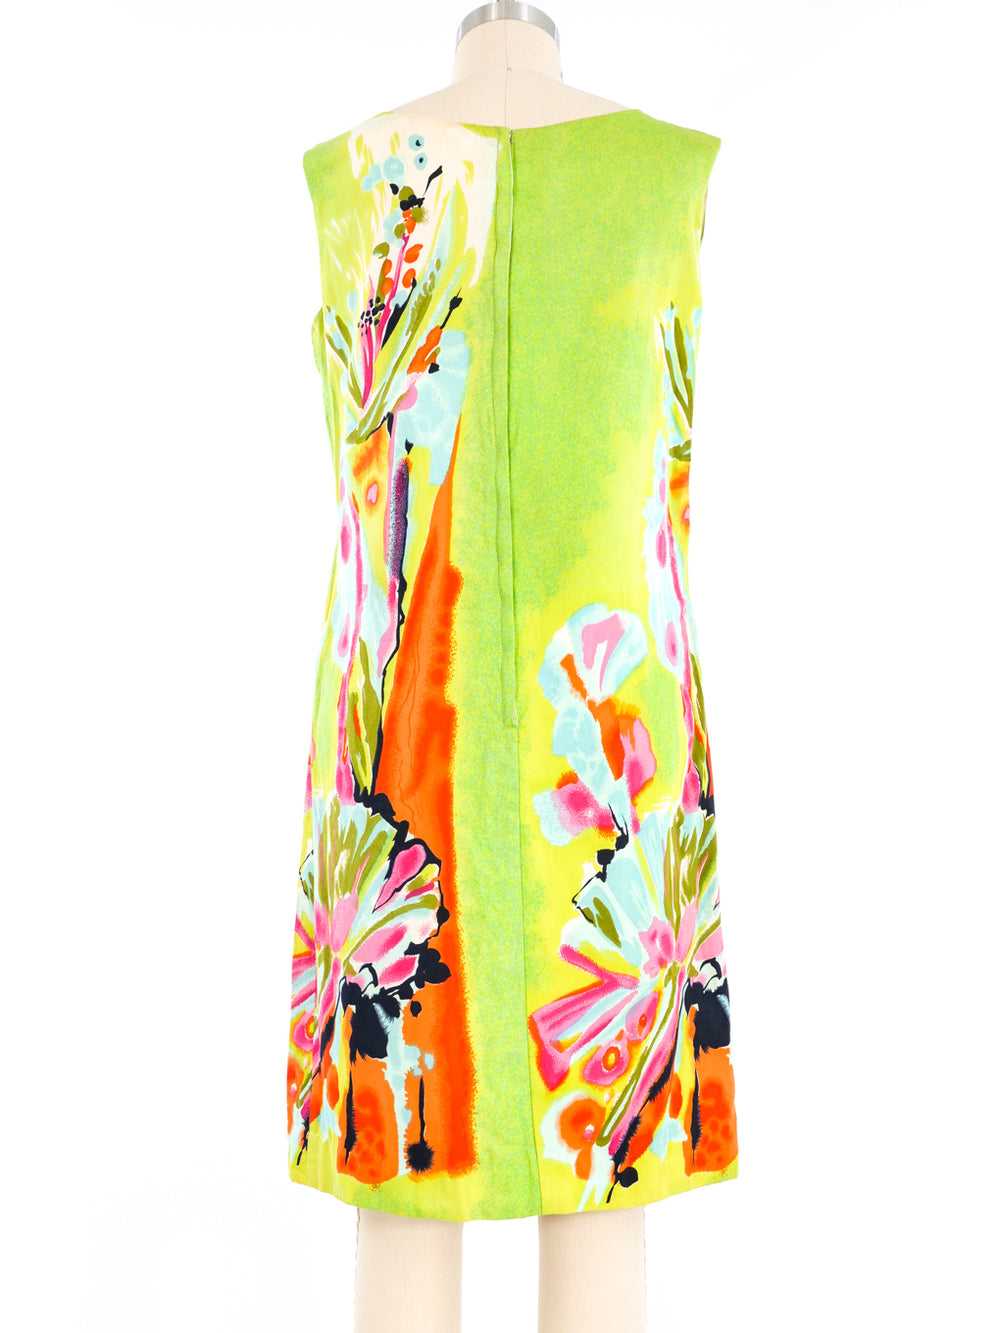 Watercolor Printed Floral Shift Dress - image 4